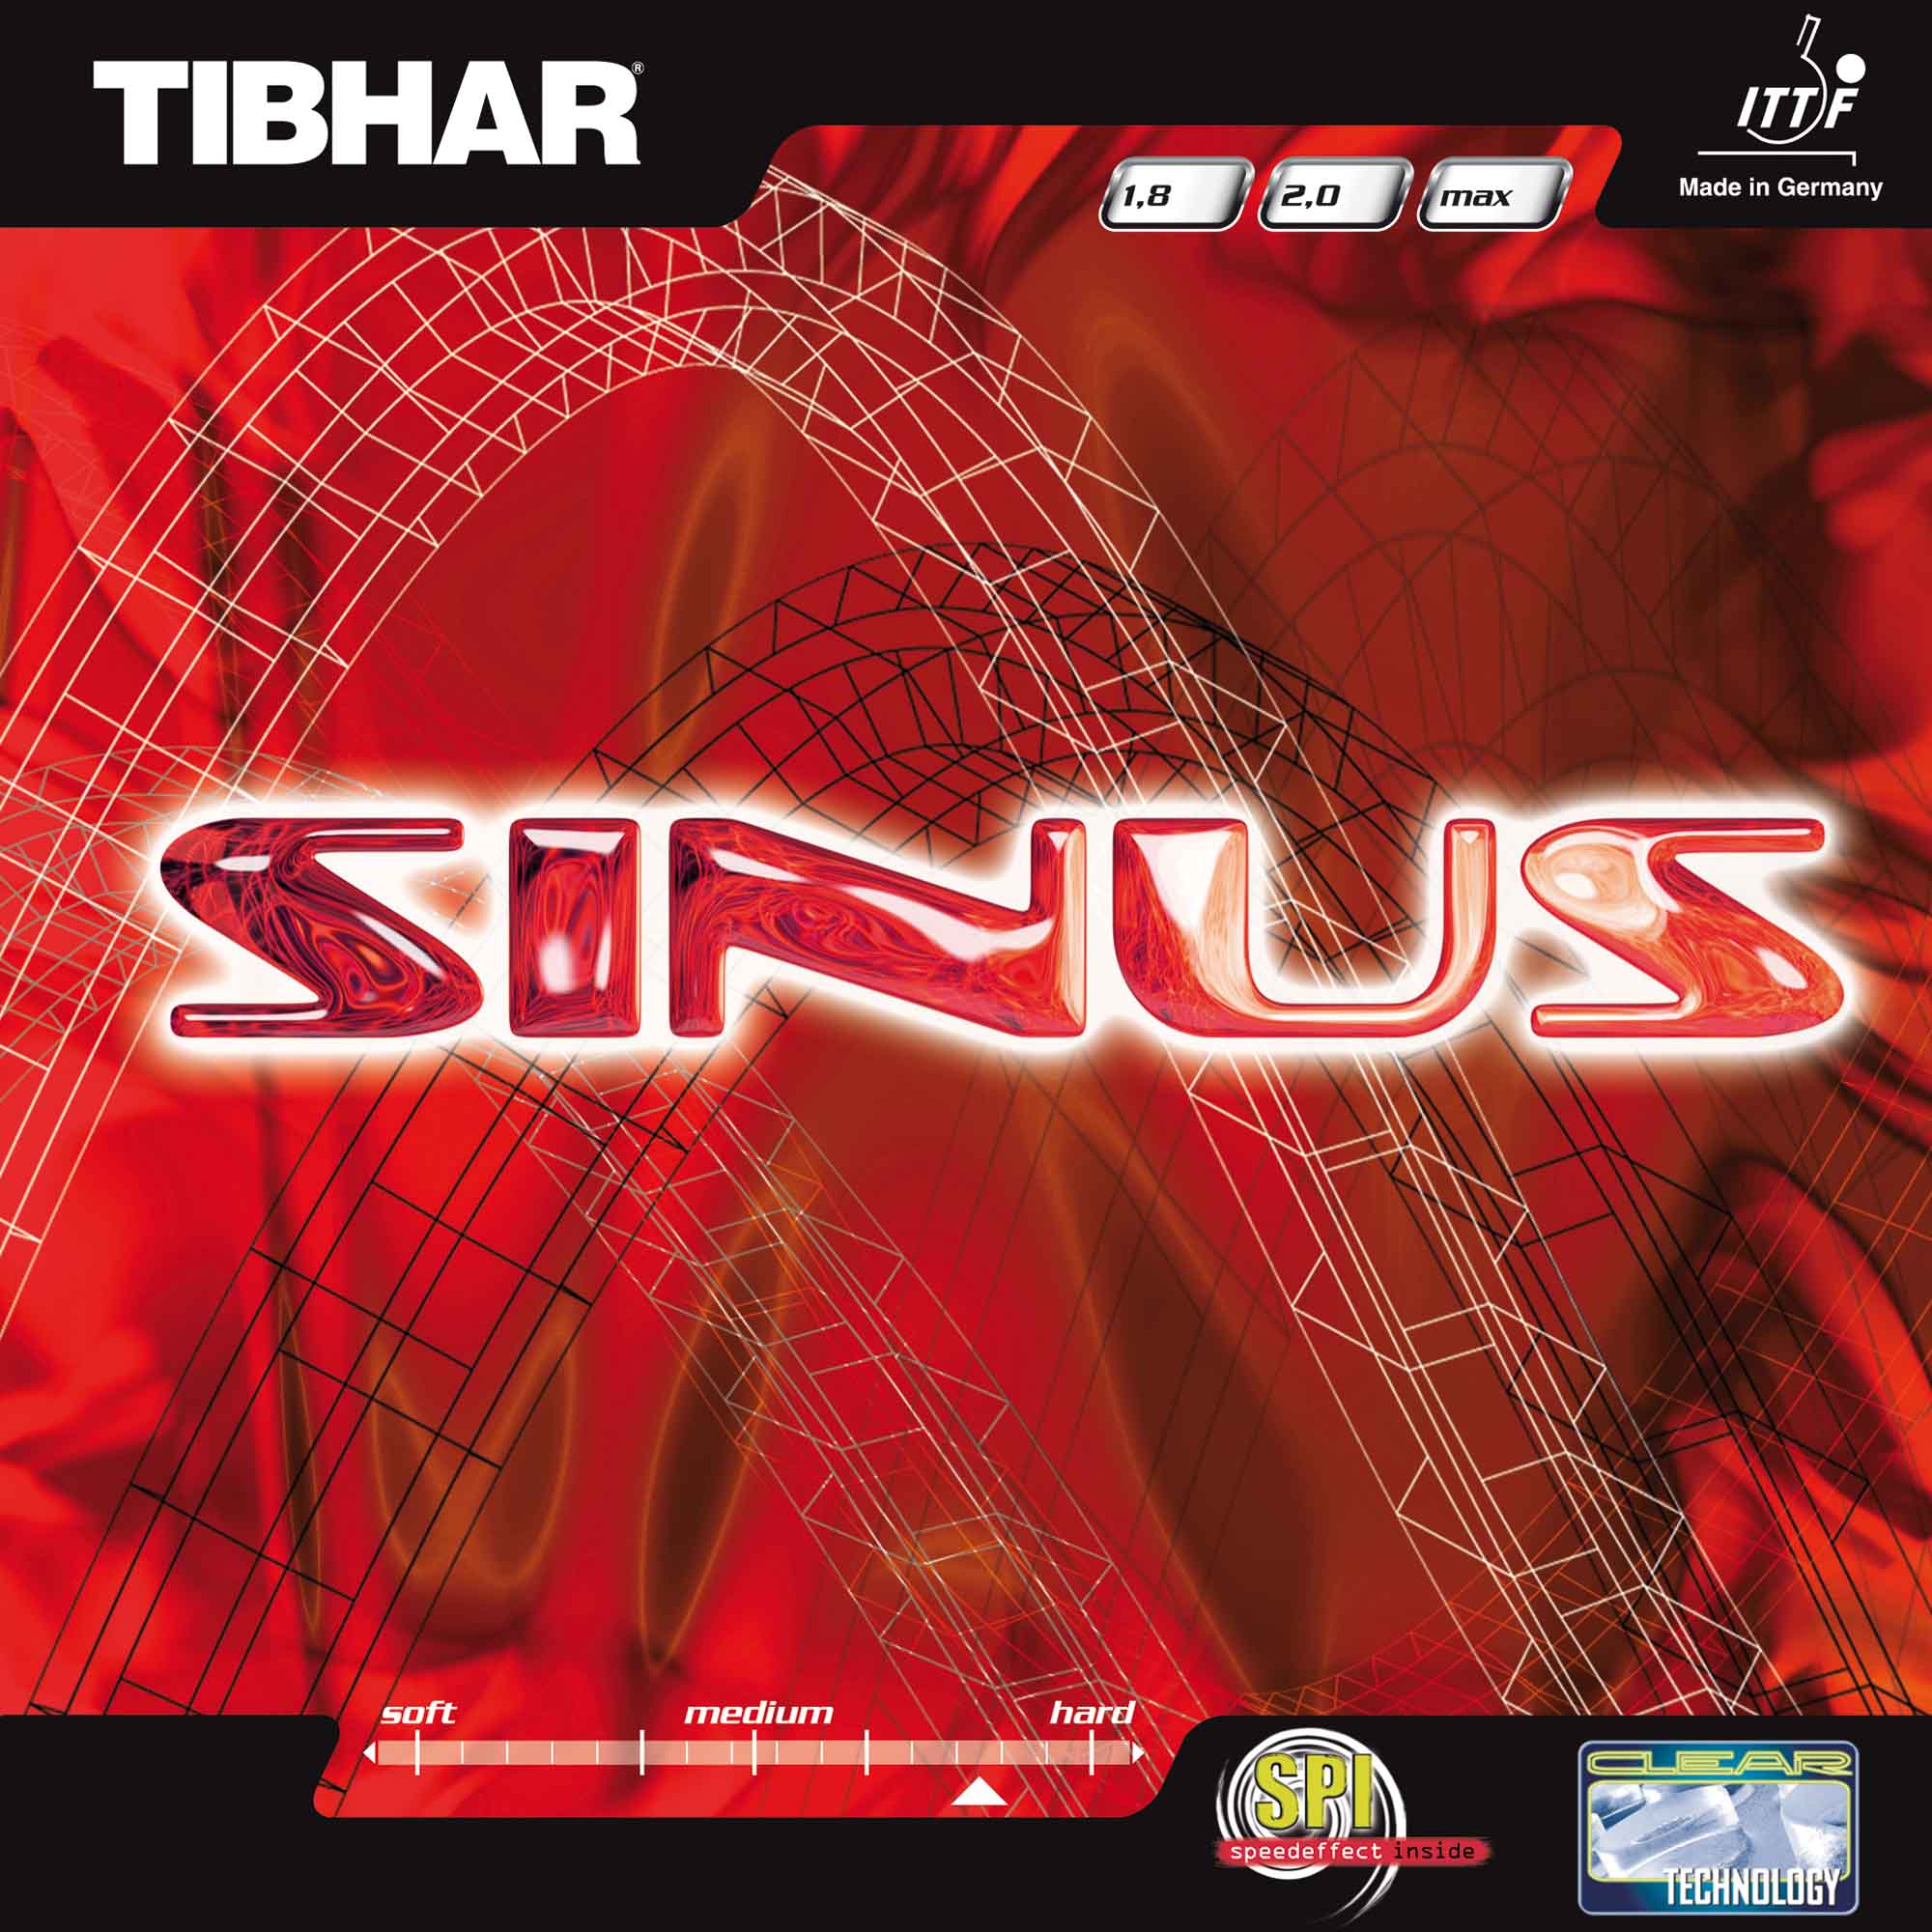 TIBHAR Rubber Sinus buy online  red 1,8 mm